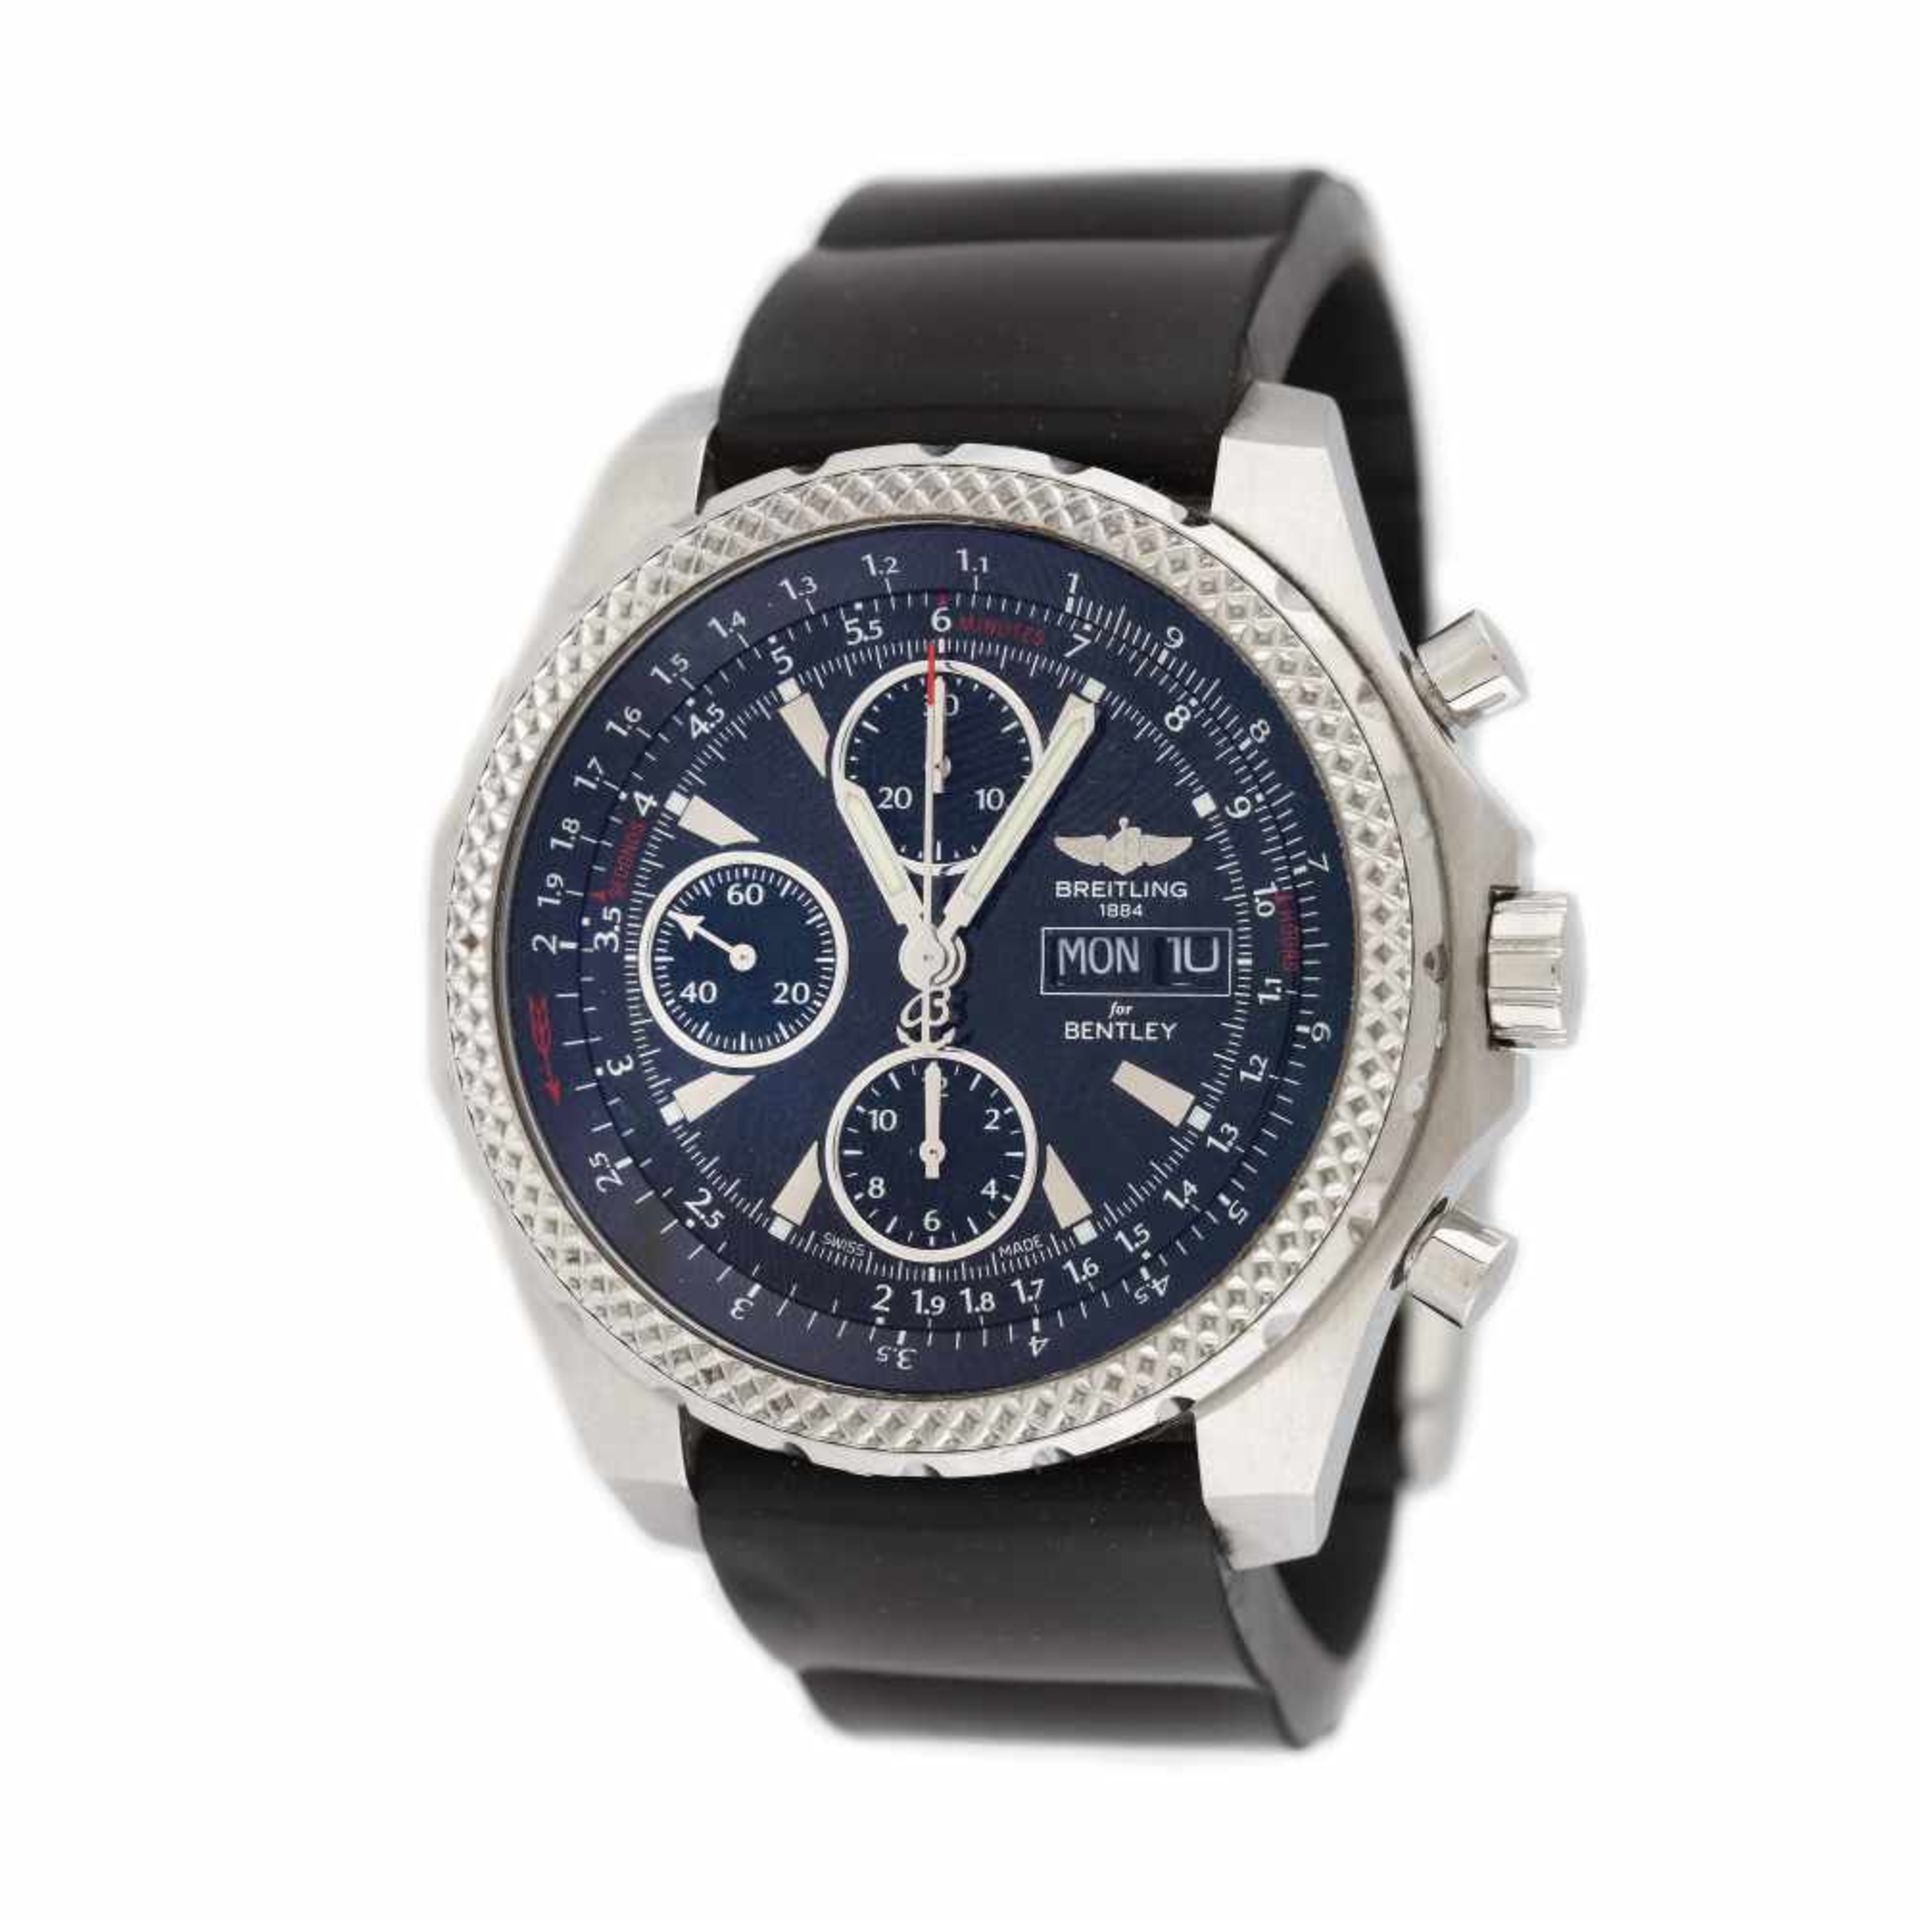 Breitling wristwatch, made for Bentley, men